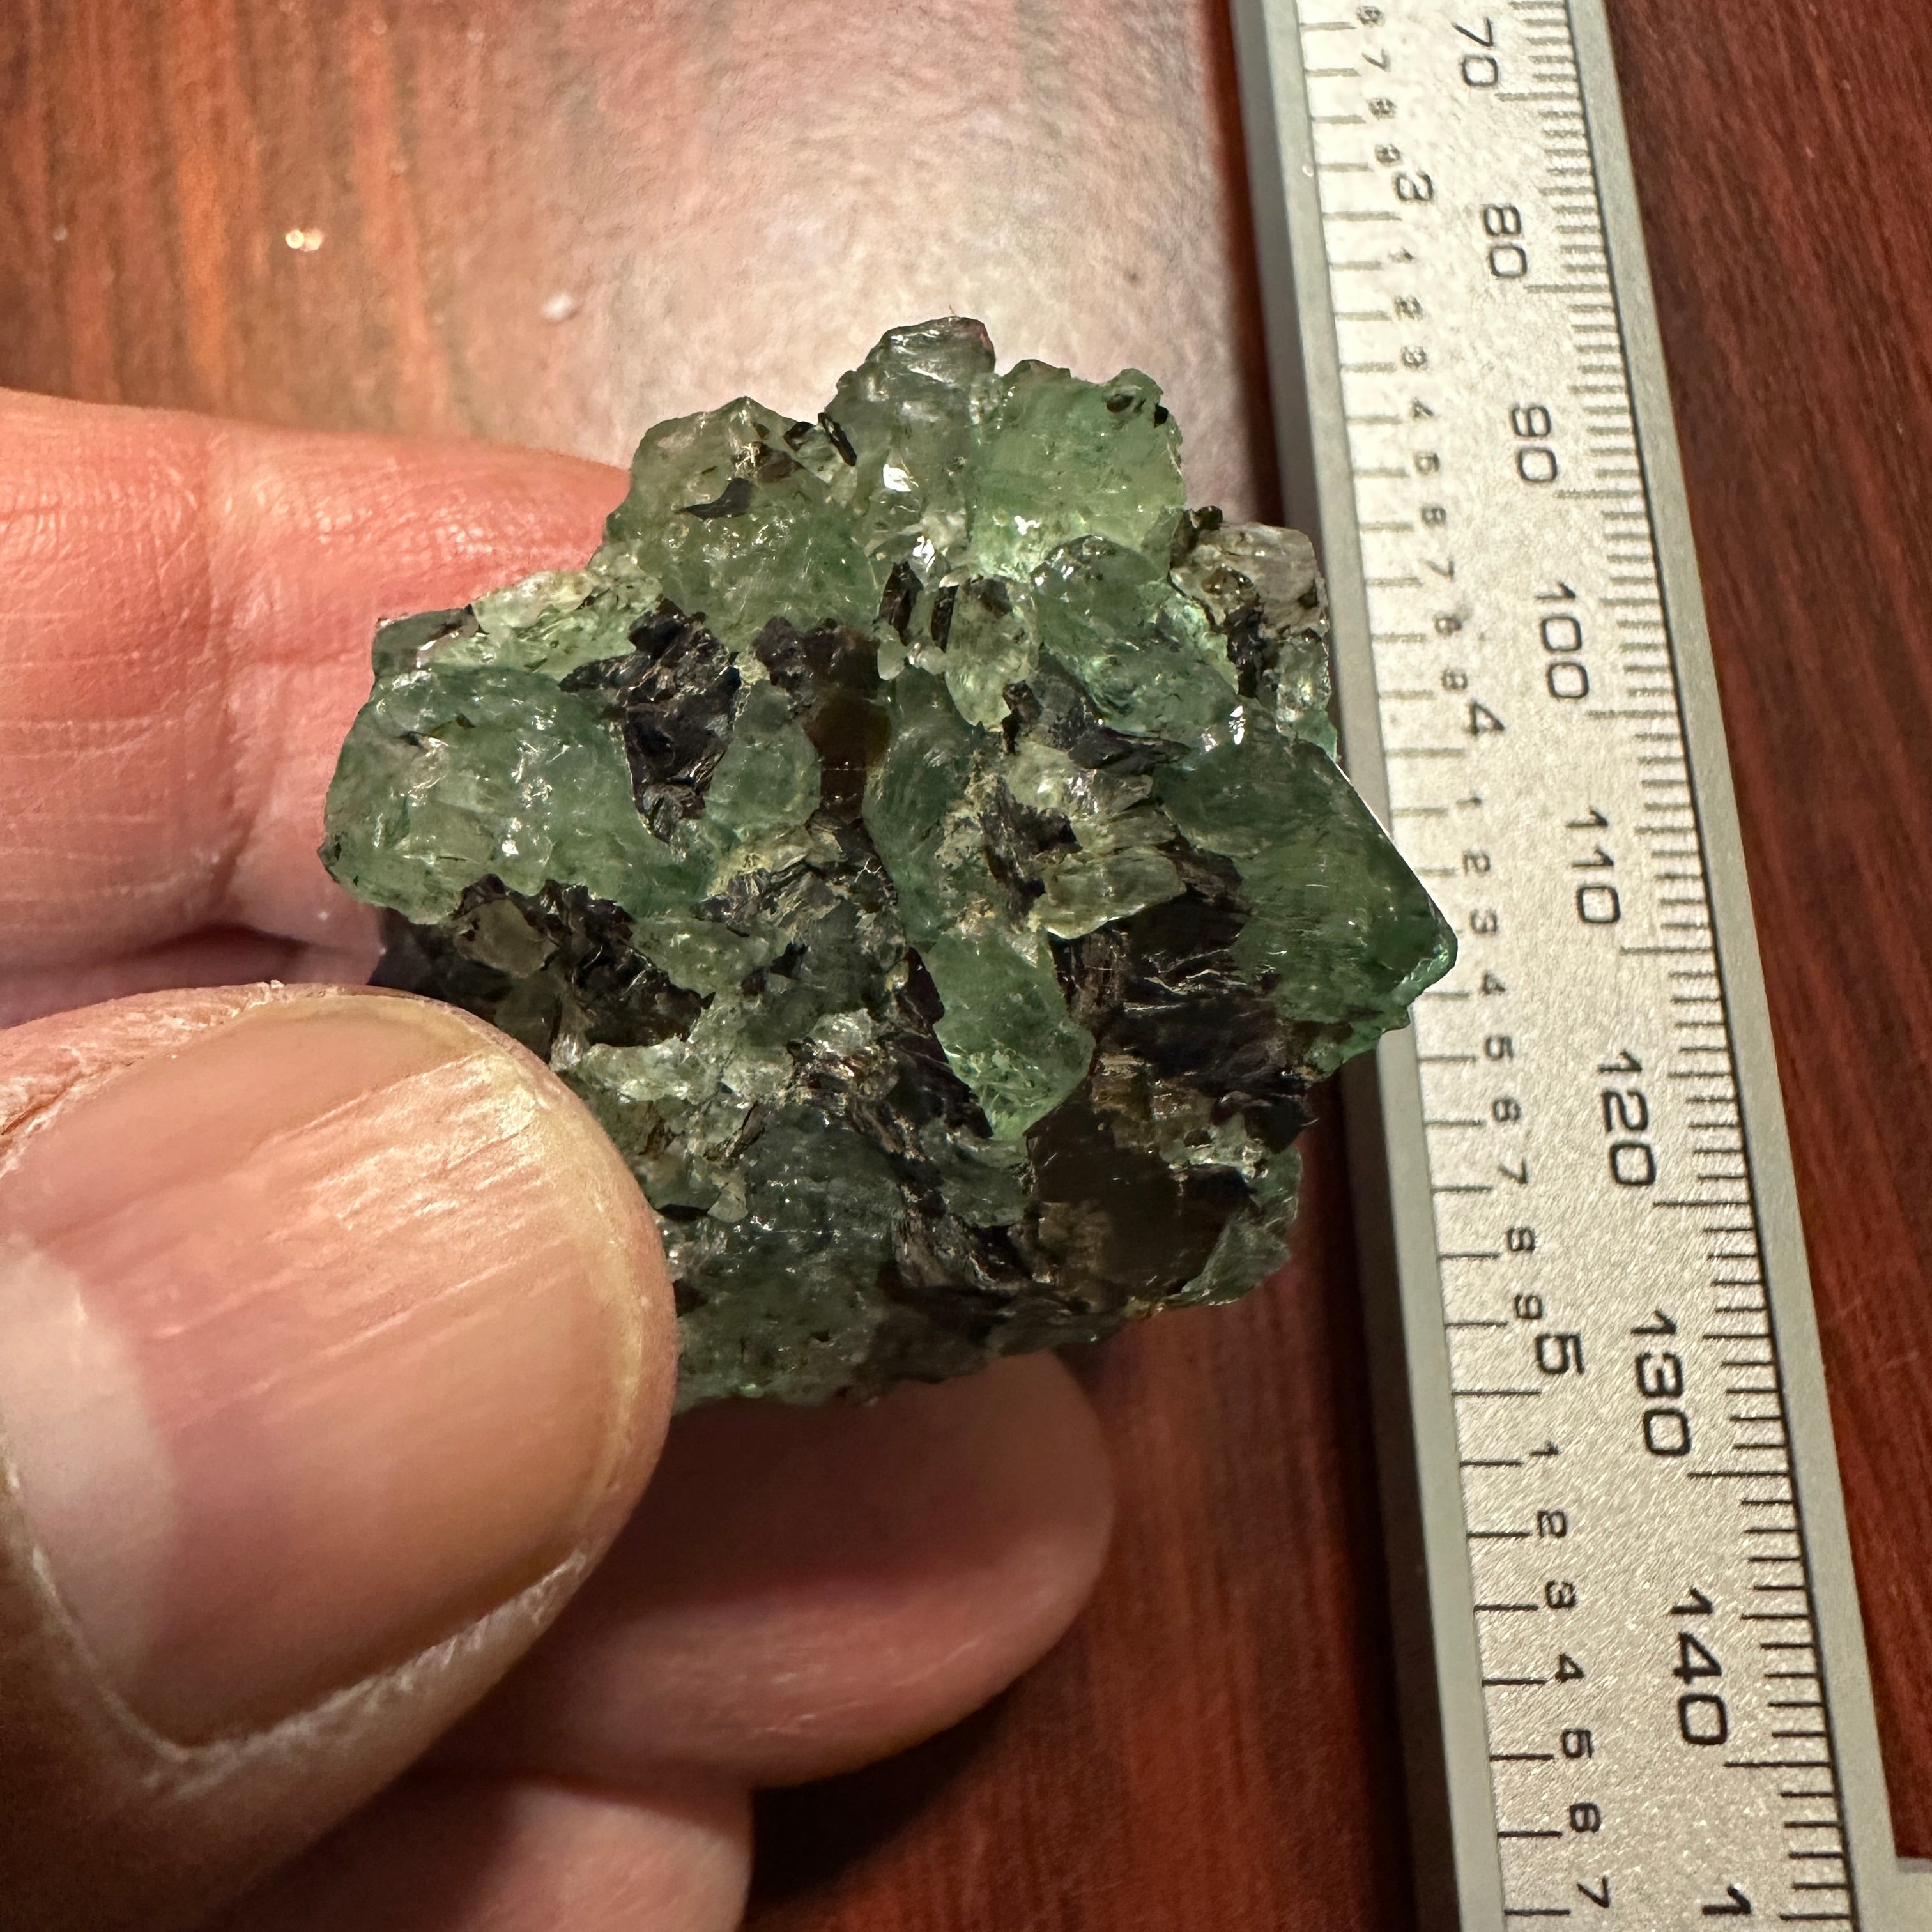 23.60Gm Emerald Crystal Tanzania Untreated Unheated